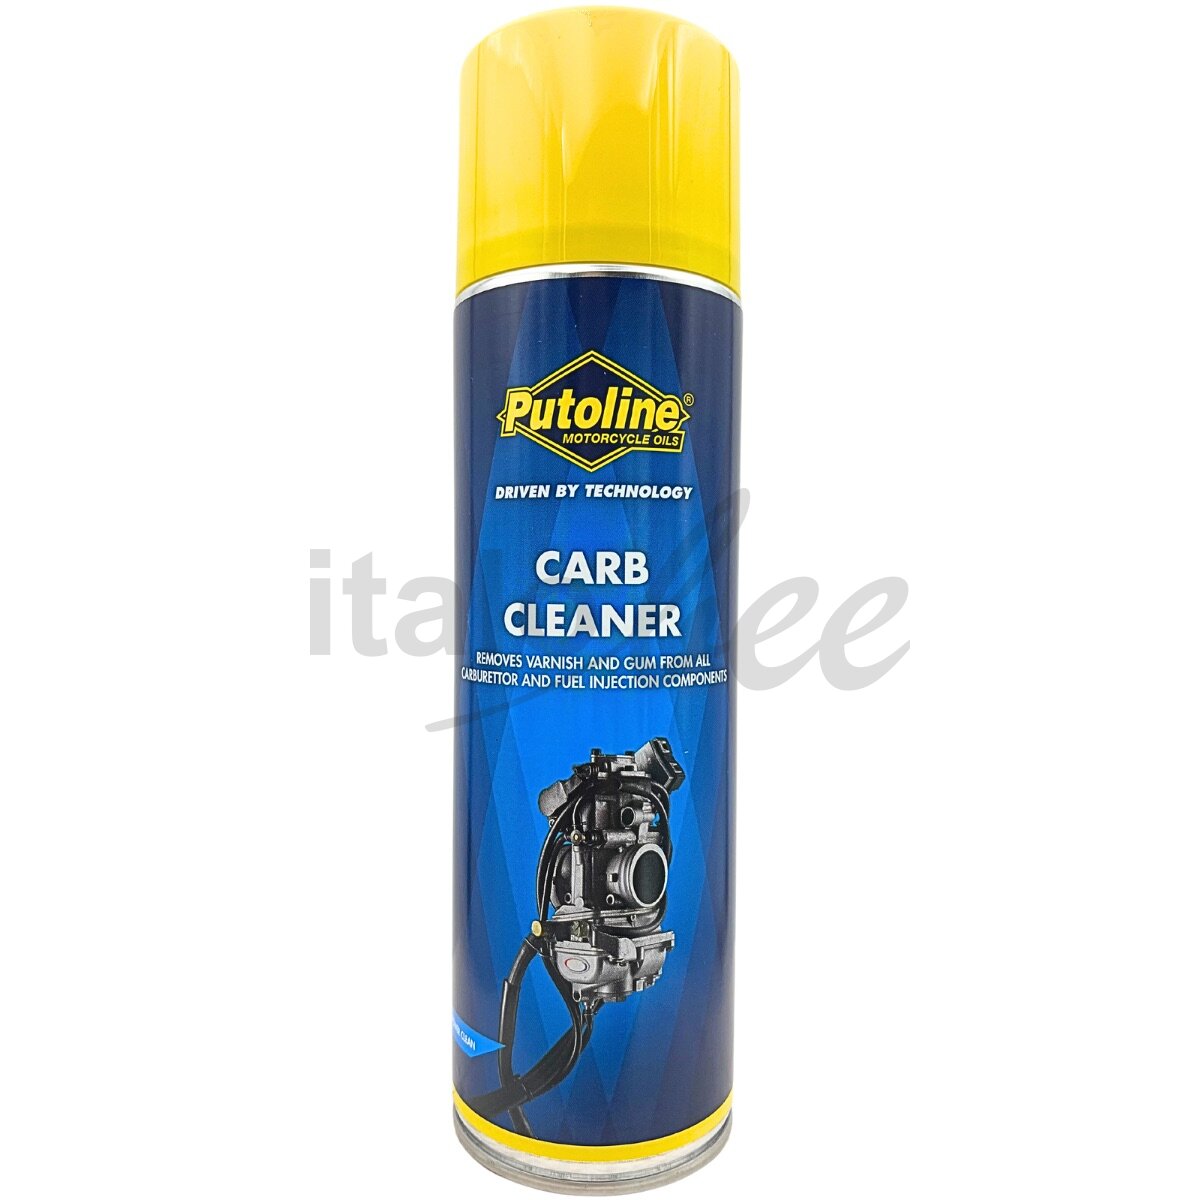 https://www.italobee.de/media/image/product/5758/lg/vergaserreiniger-spray-putoline-500ml.jpg